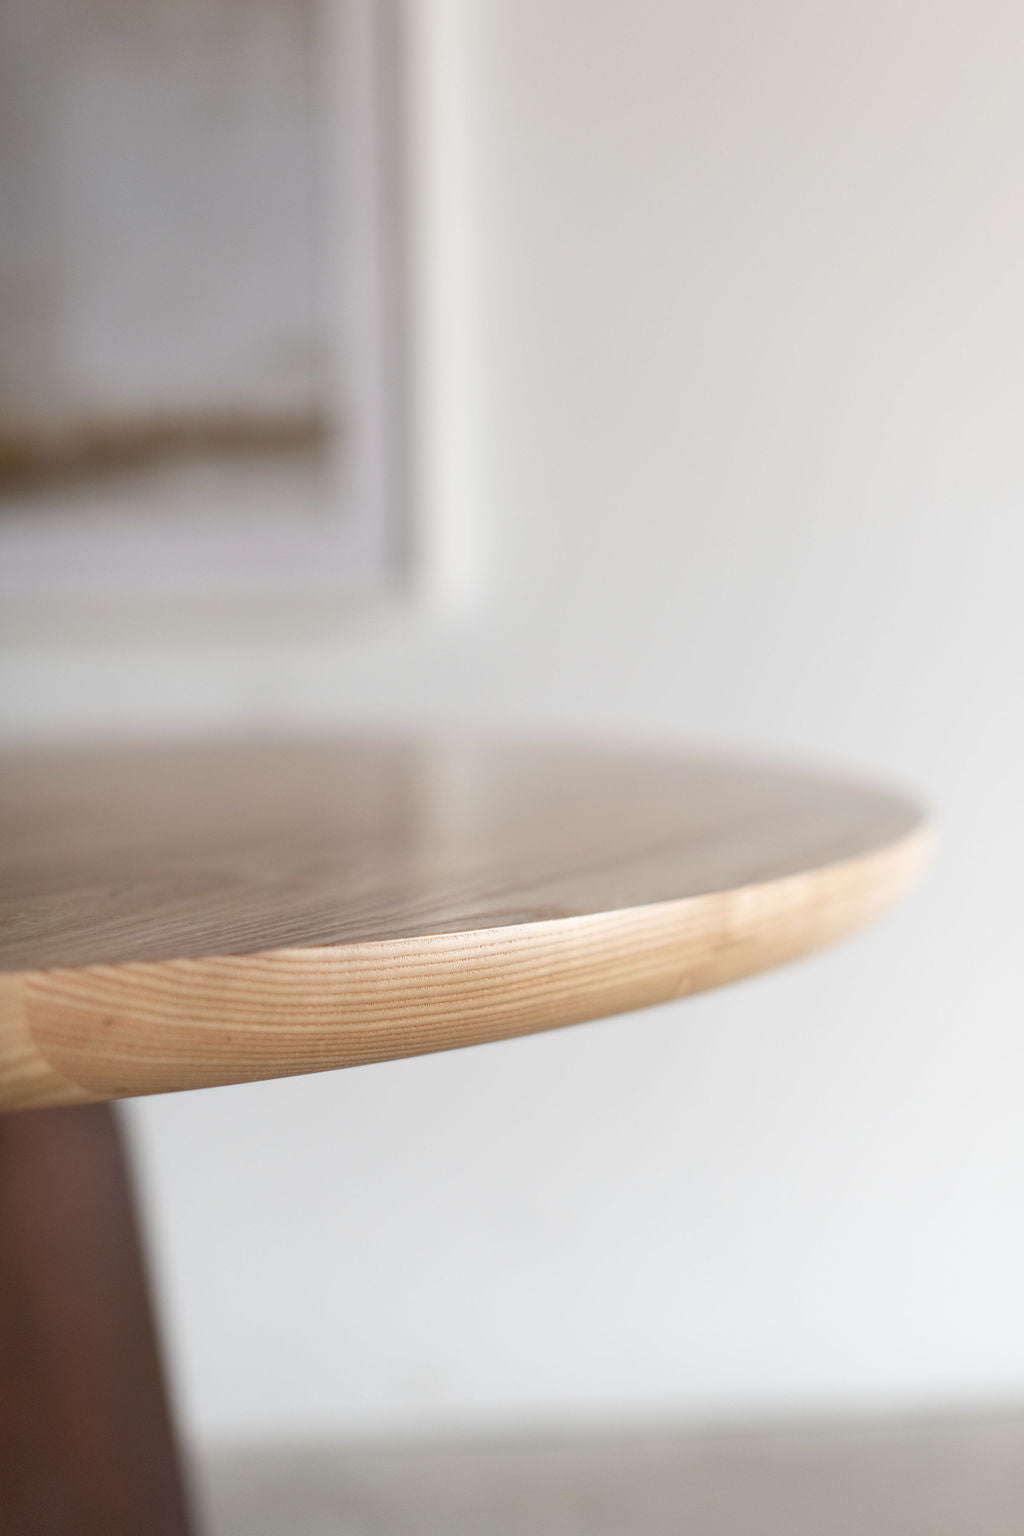 Tula Coffee table- steel legs with oak wood top